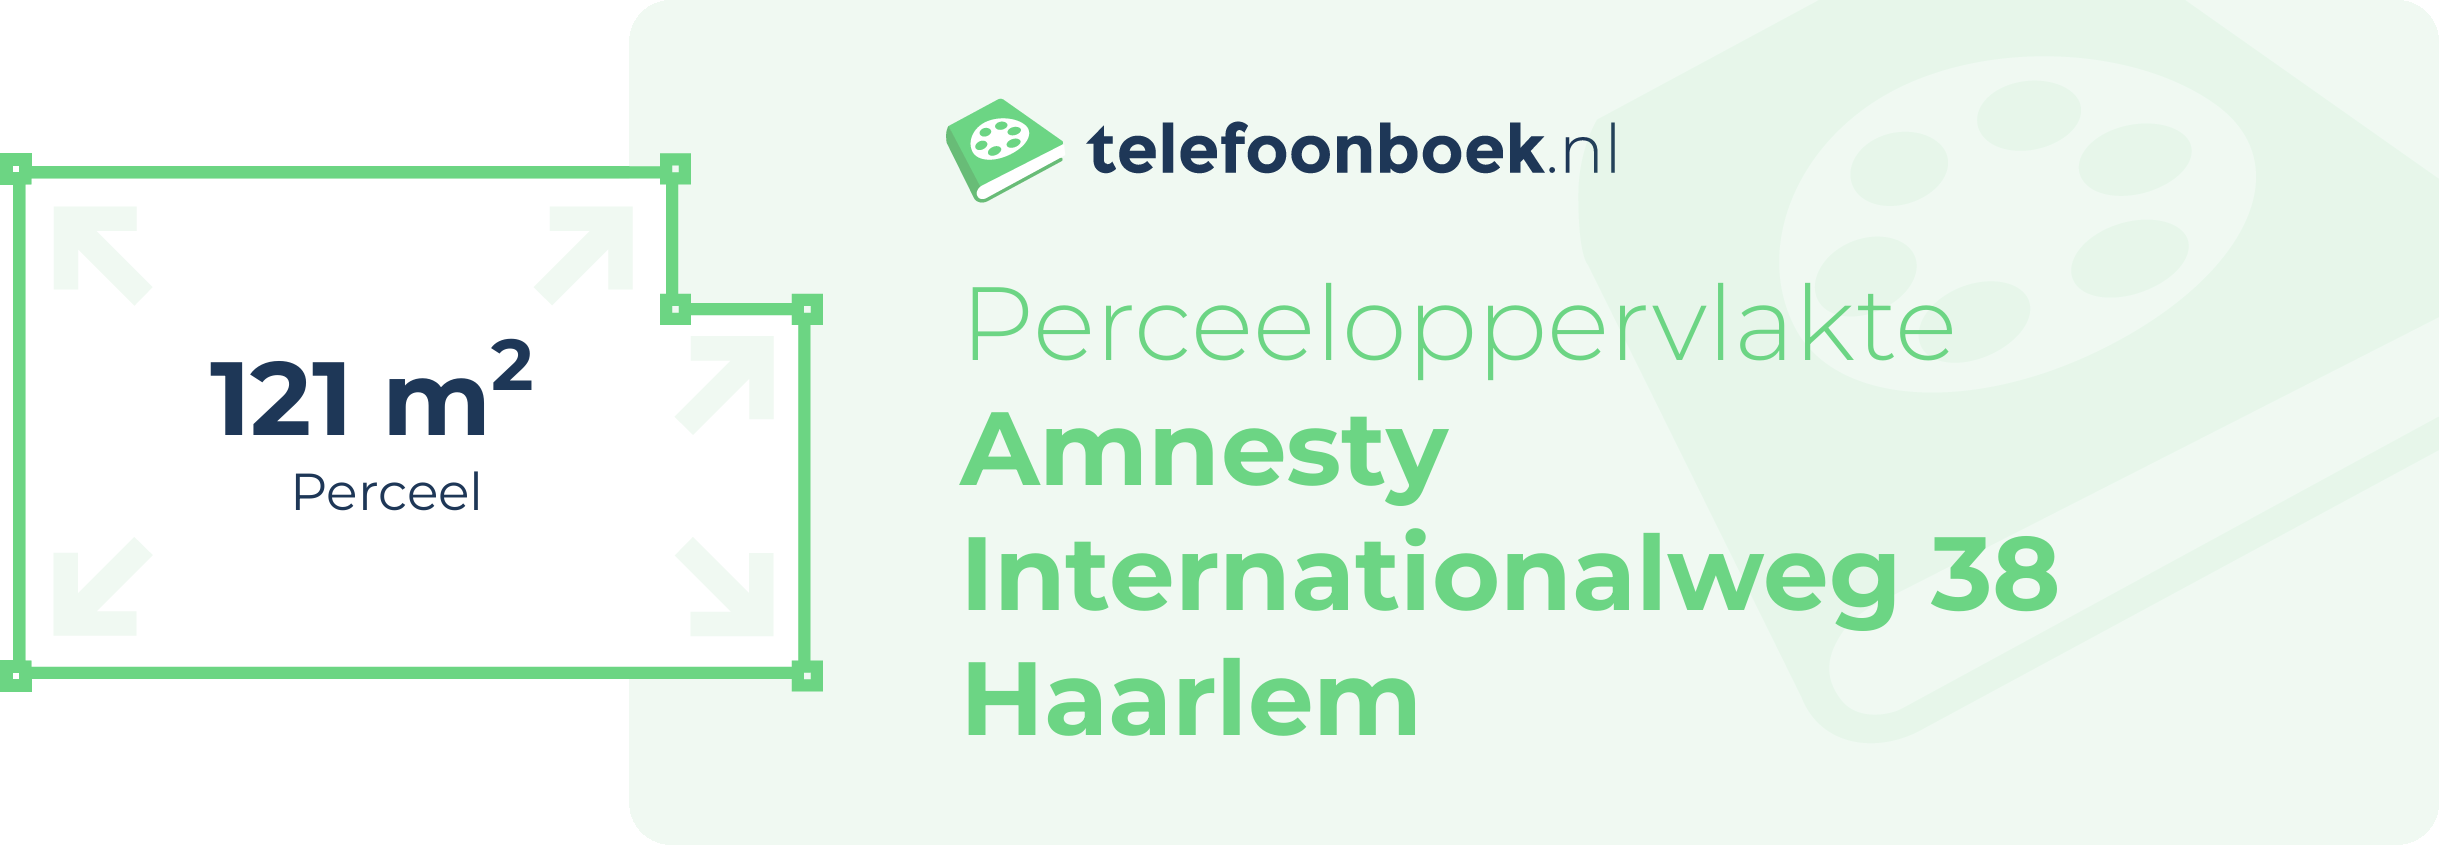 Perceeloppervlakte Amnesty Internationalweg 38 Haarlem